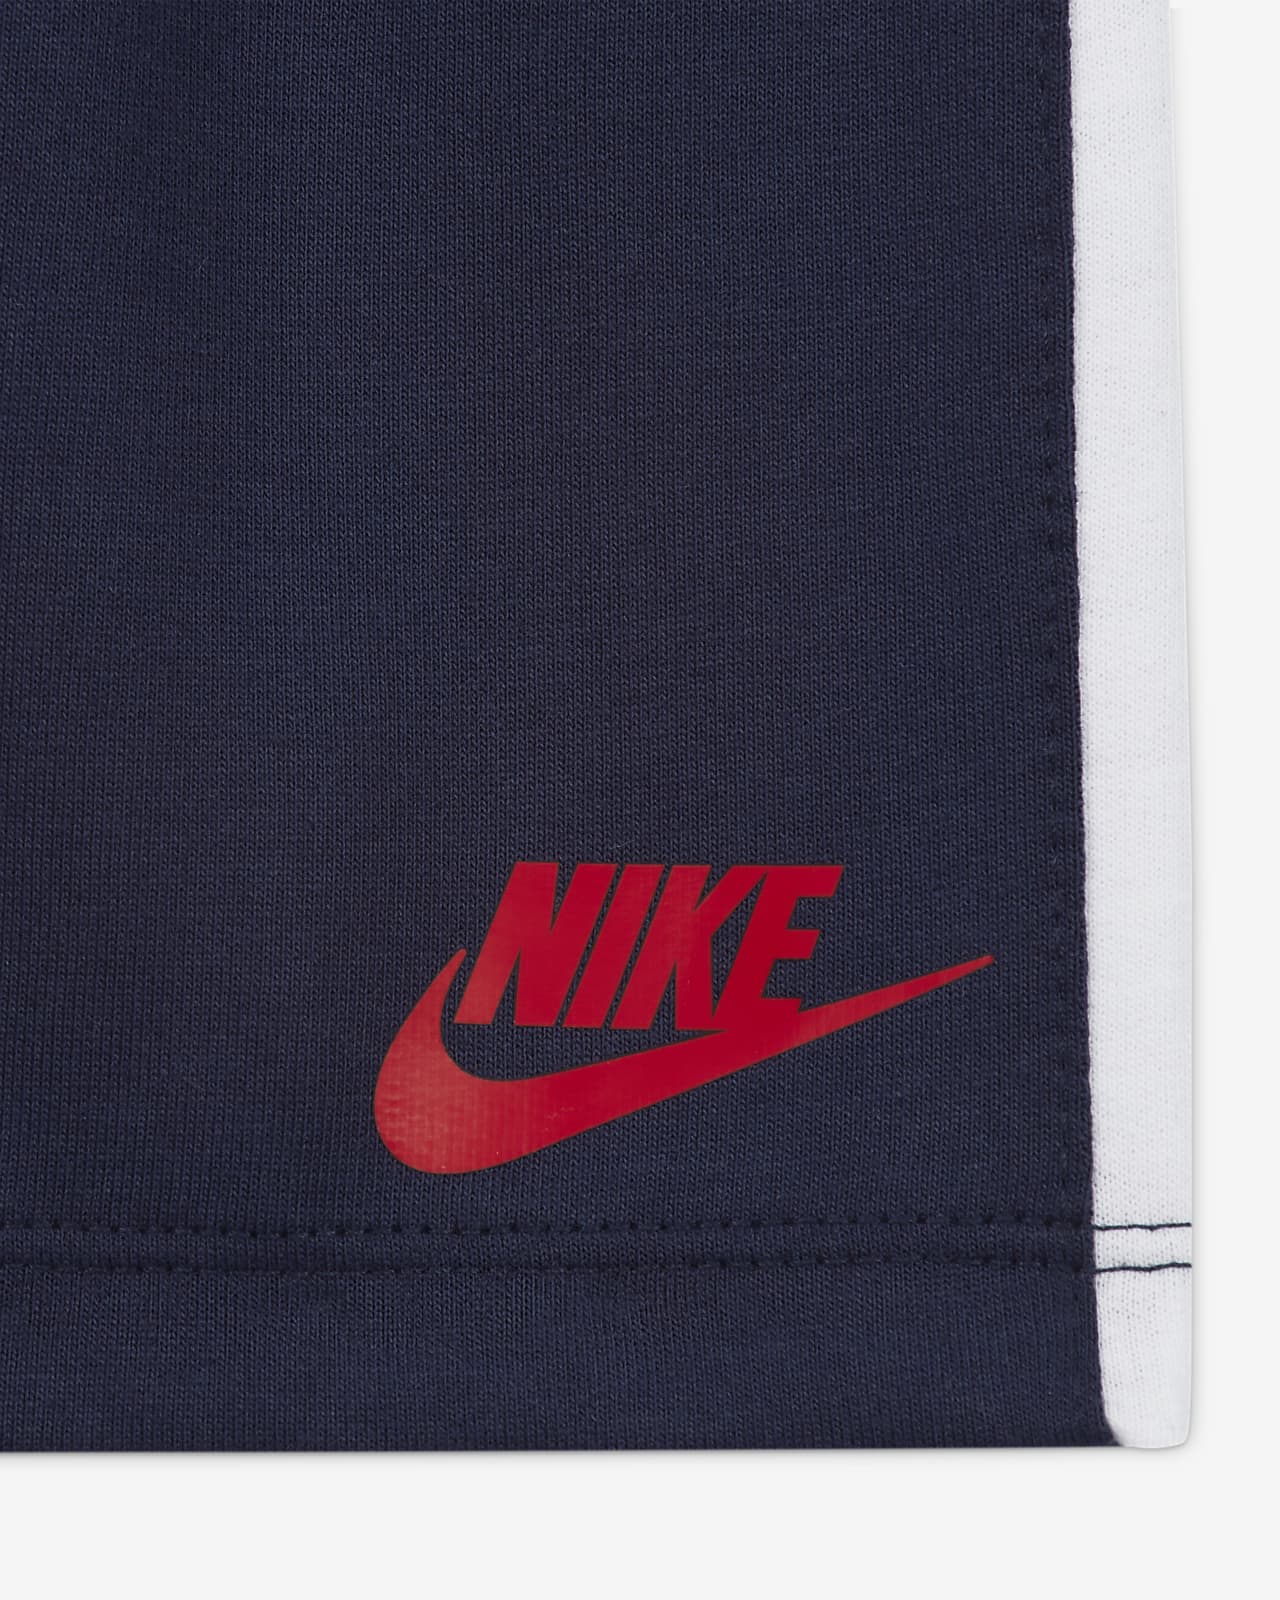 NWT 𝟐 𝐏𝐂 Nike Just Do It JDI matching L set t-shirt leggings